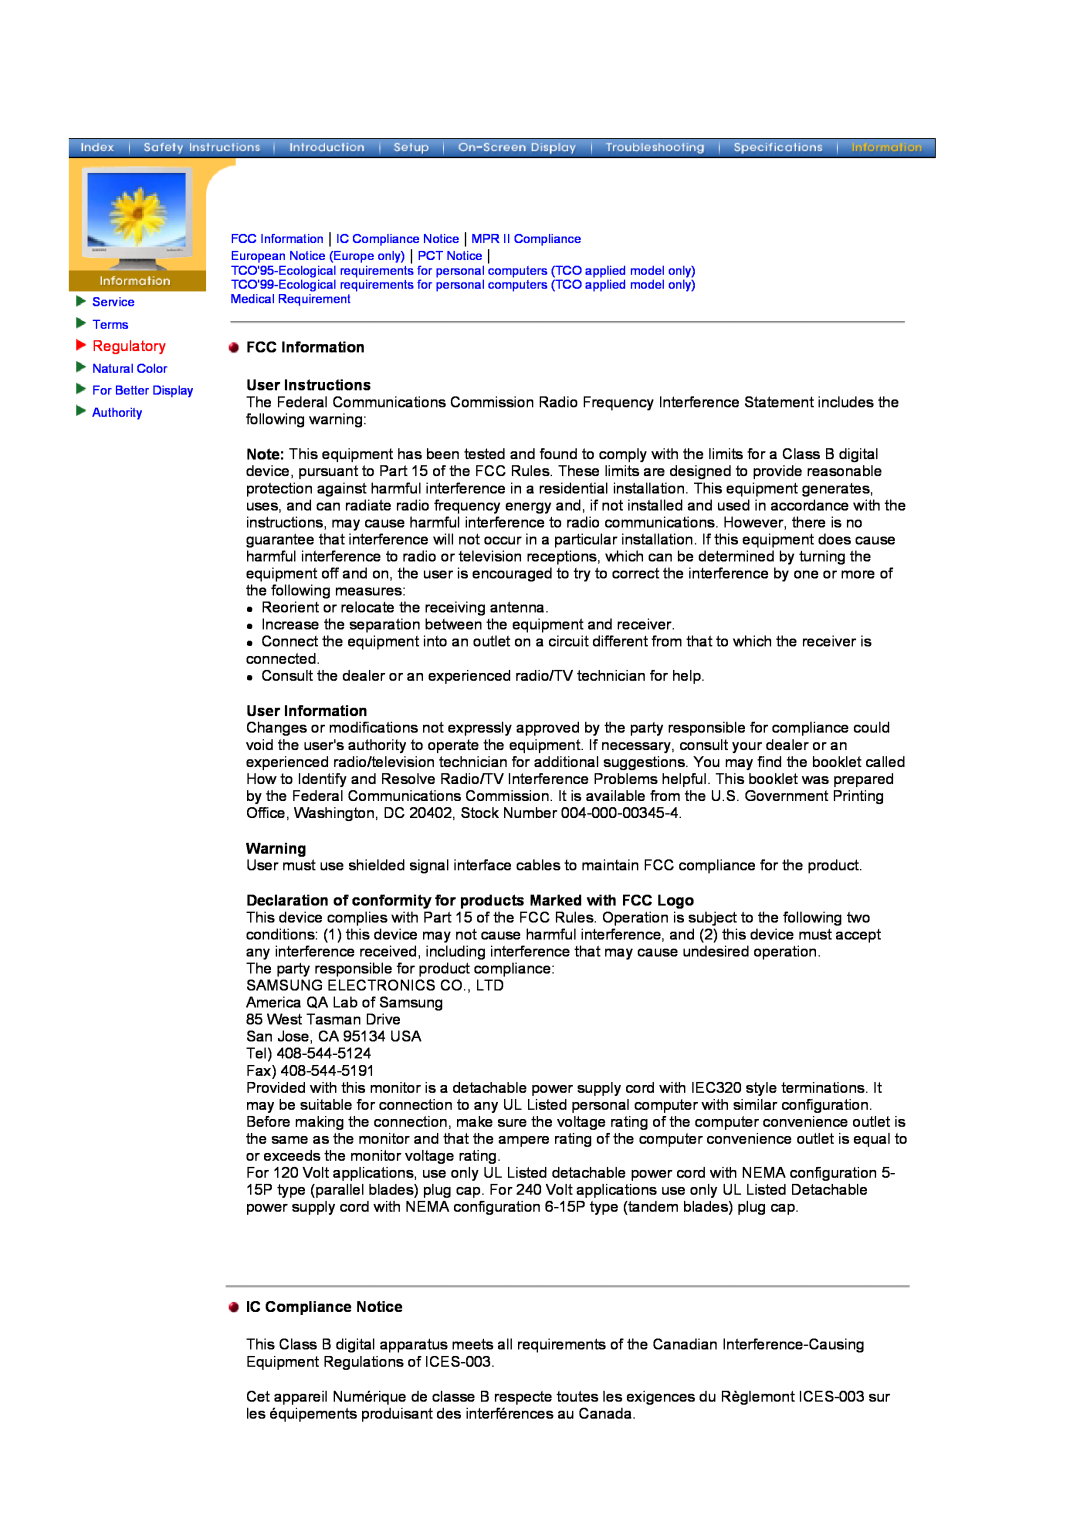 Samsung 760TFT manual Regulatory, FCC Information User Instructions, User Information, IC Compliance Notice 